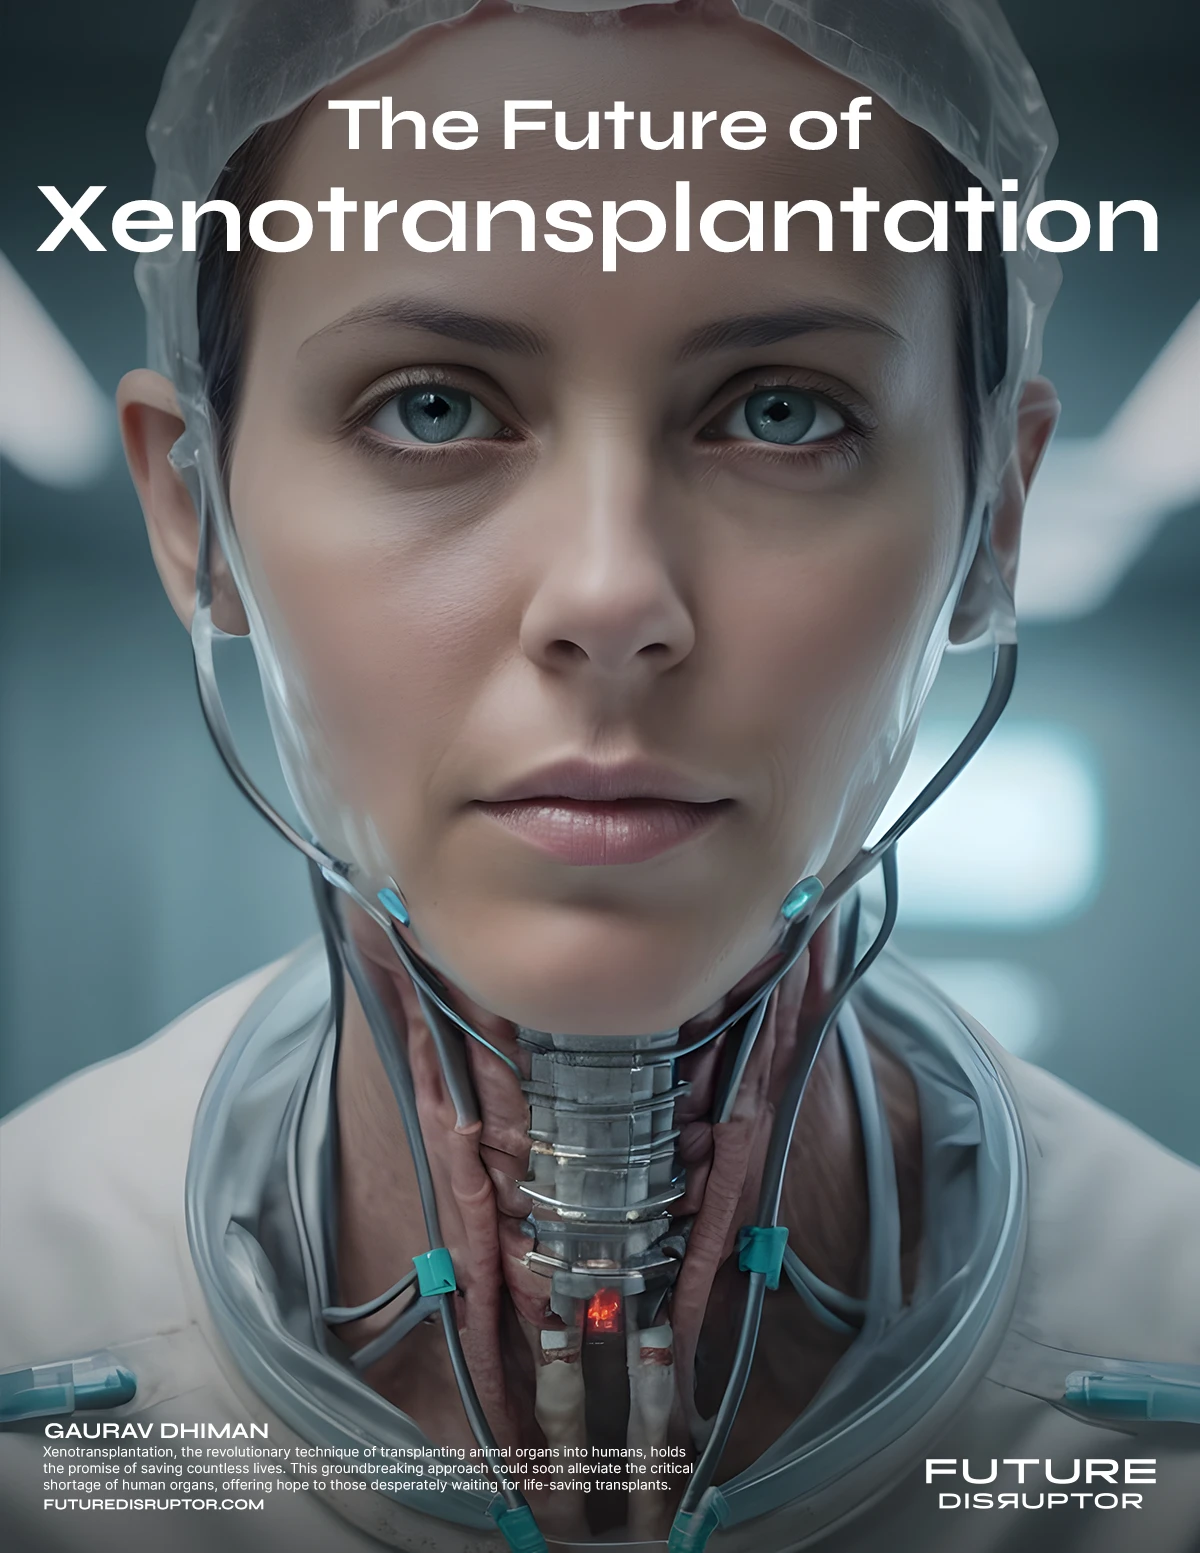 The Future of Xenotransplantation